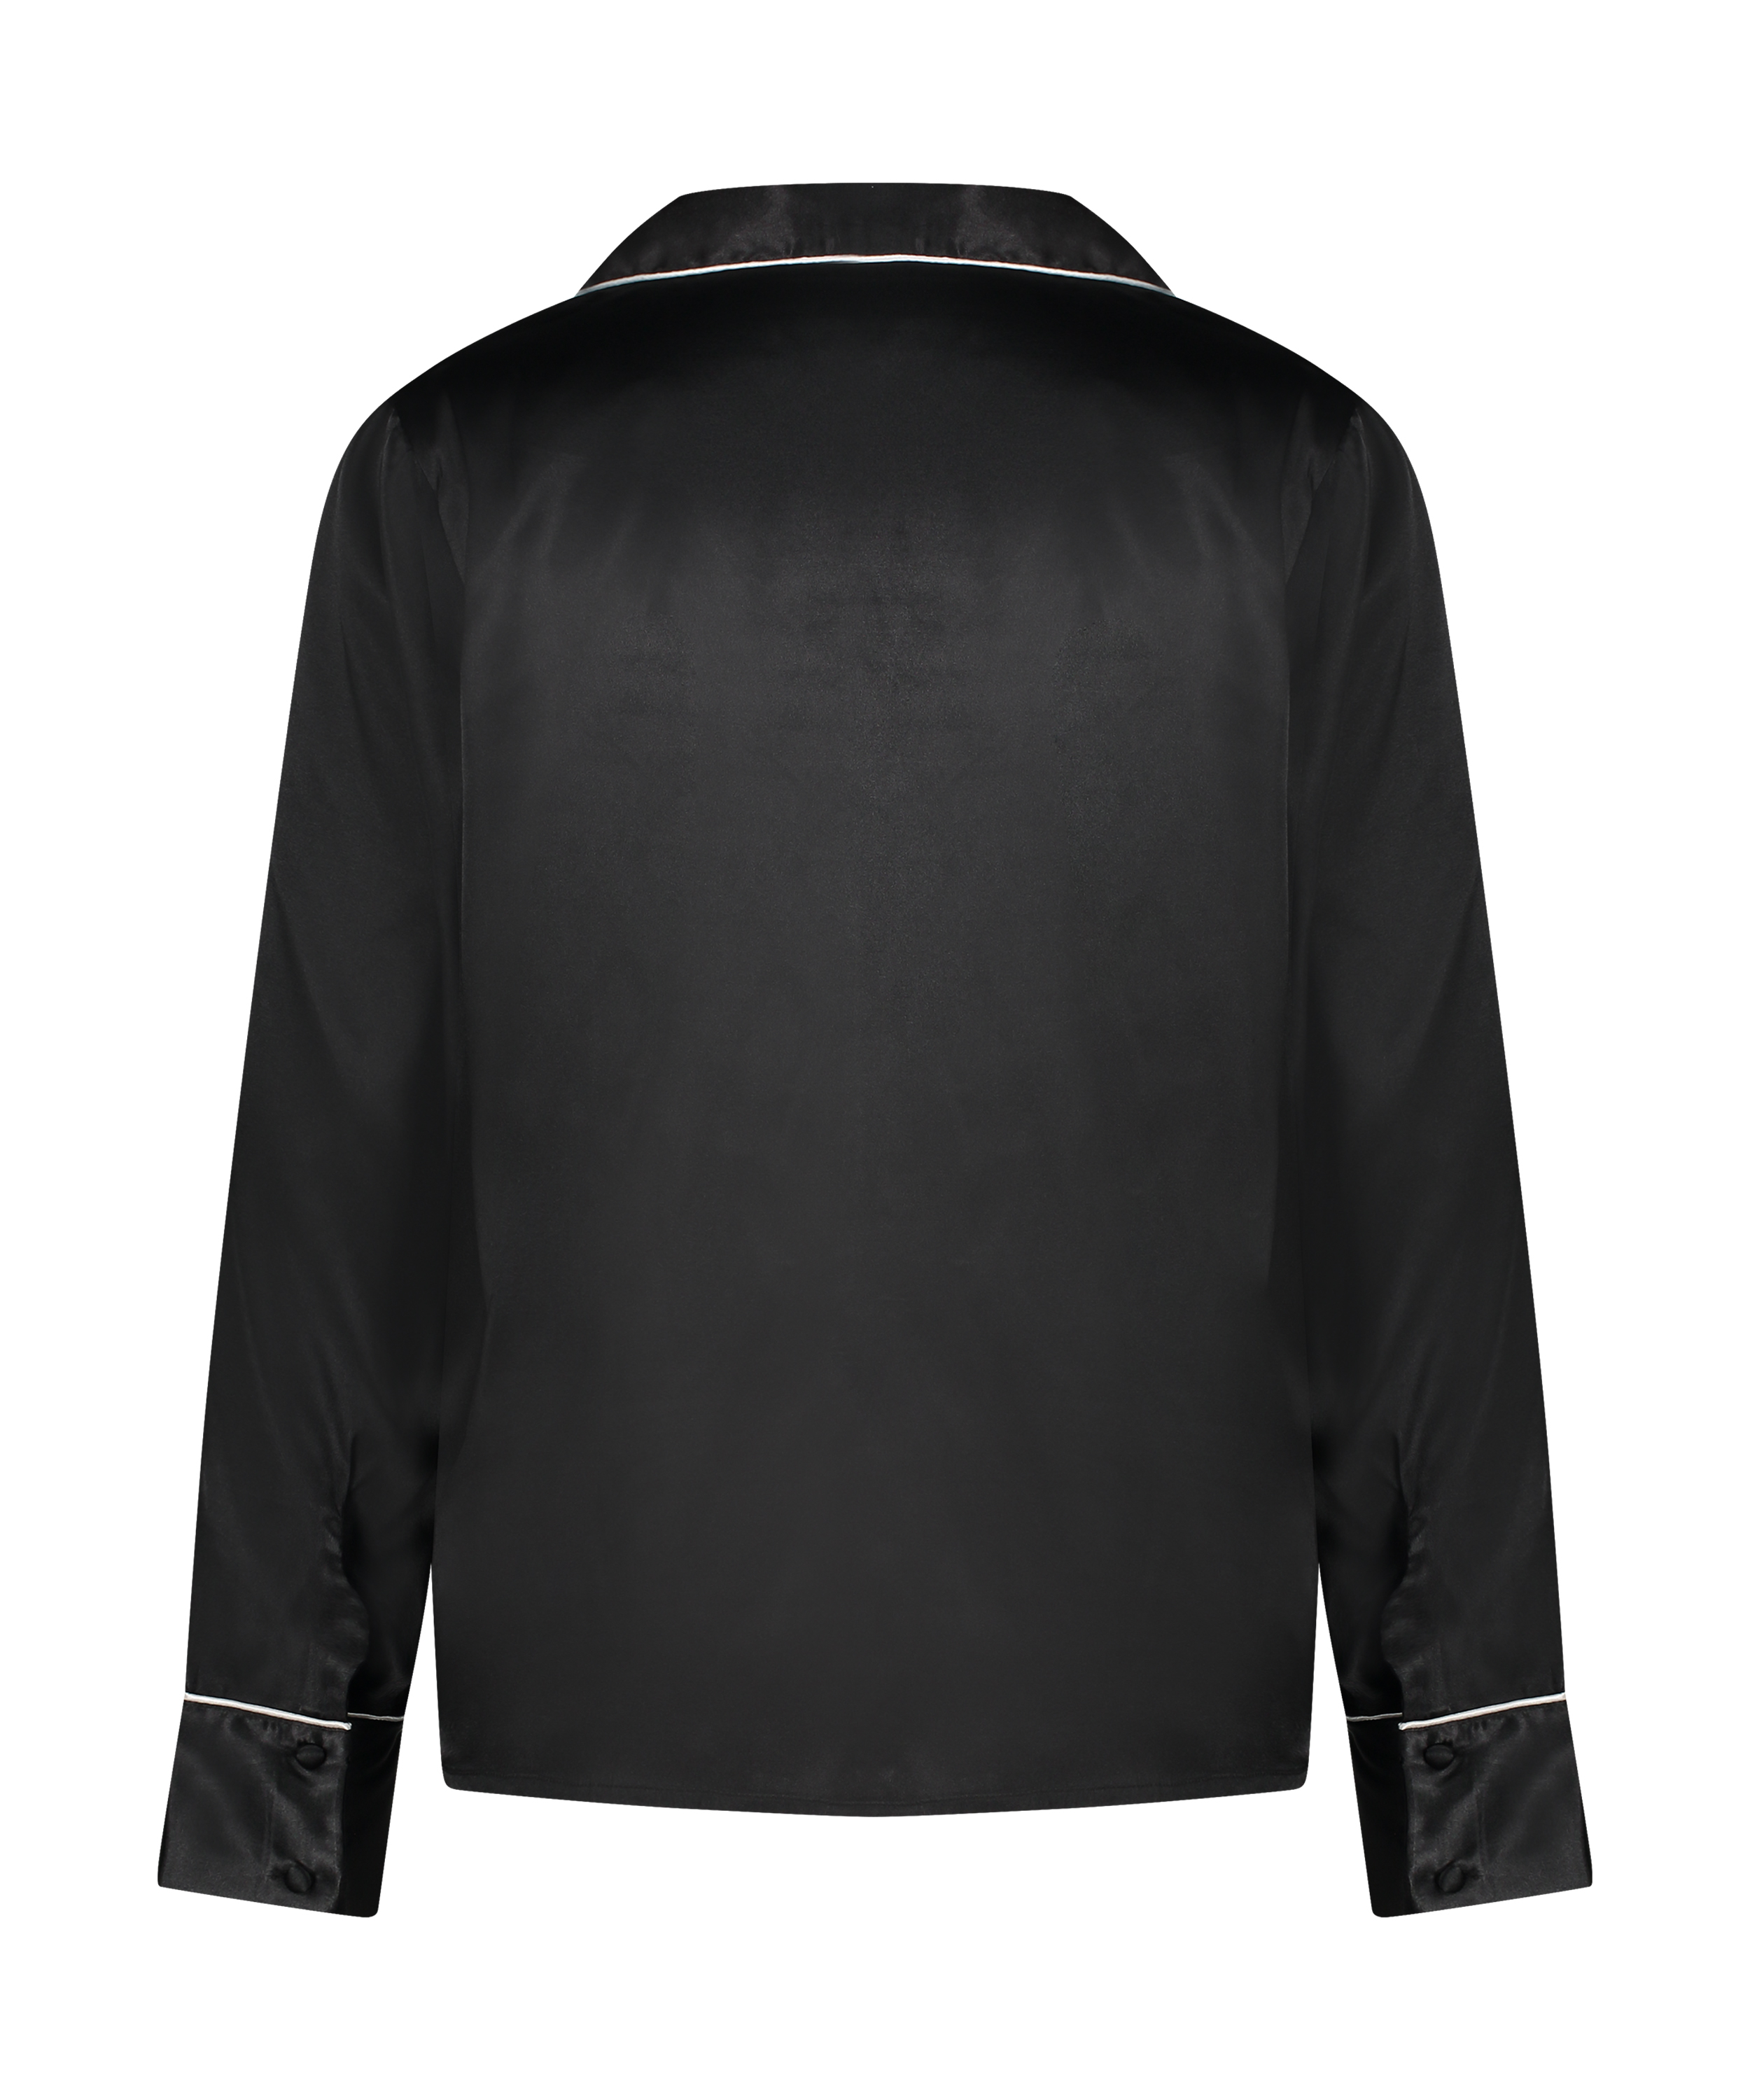 Satin Long-Sleeved Jacket, Black, main